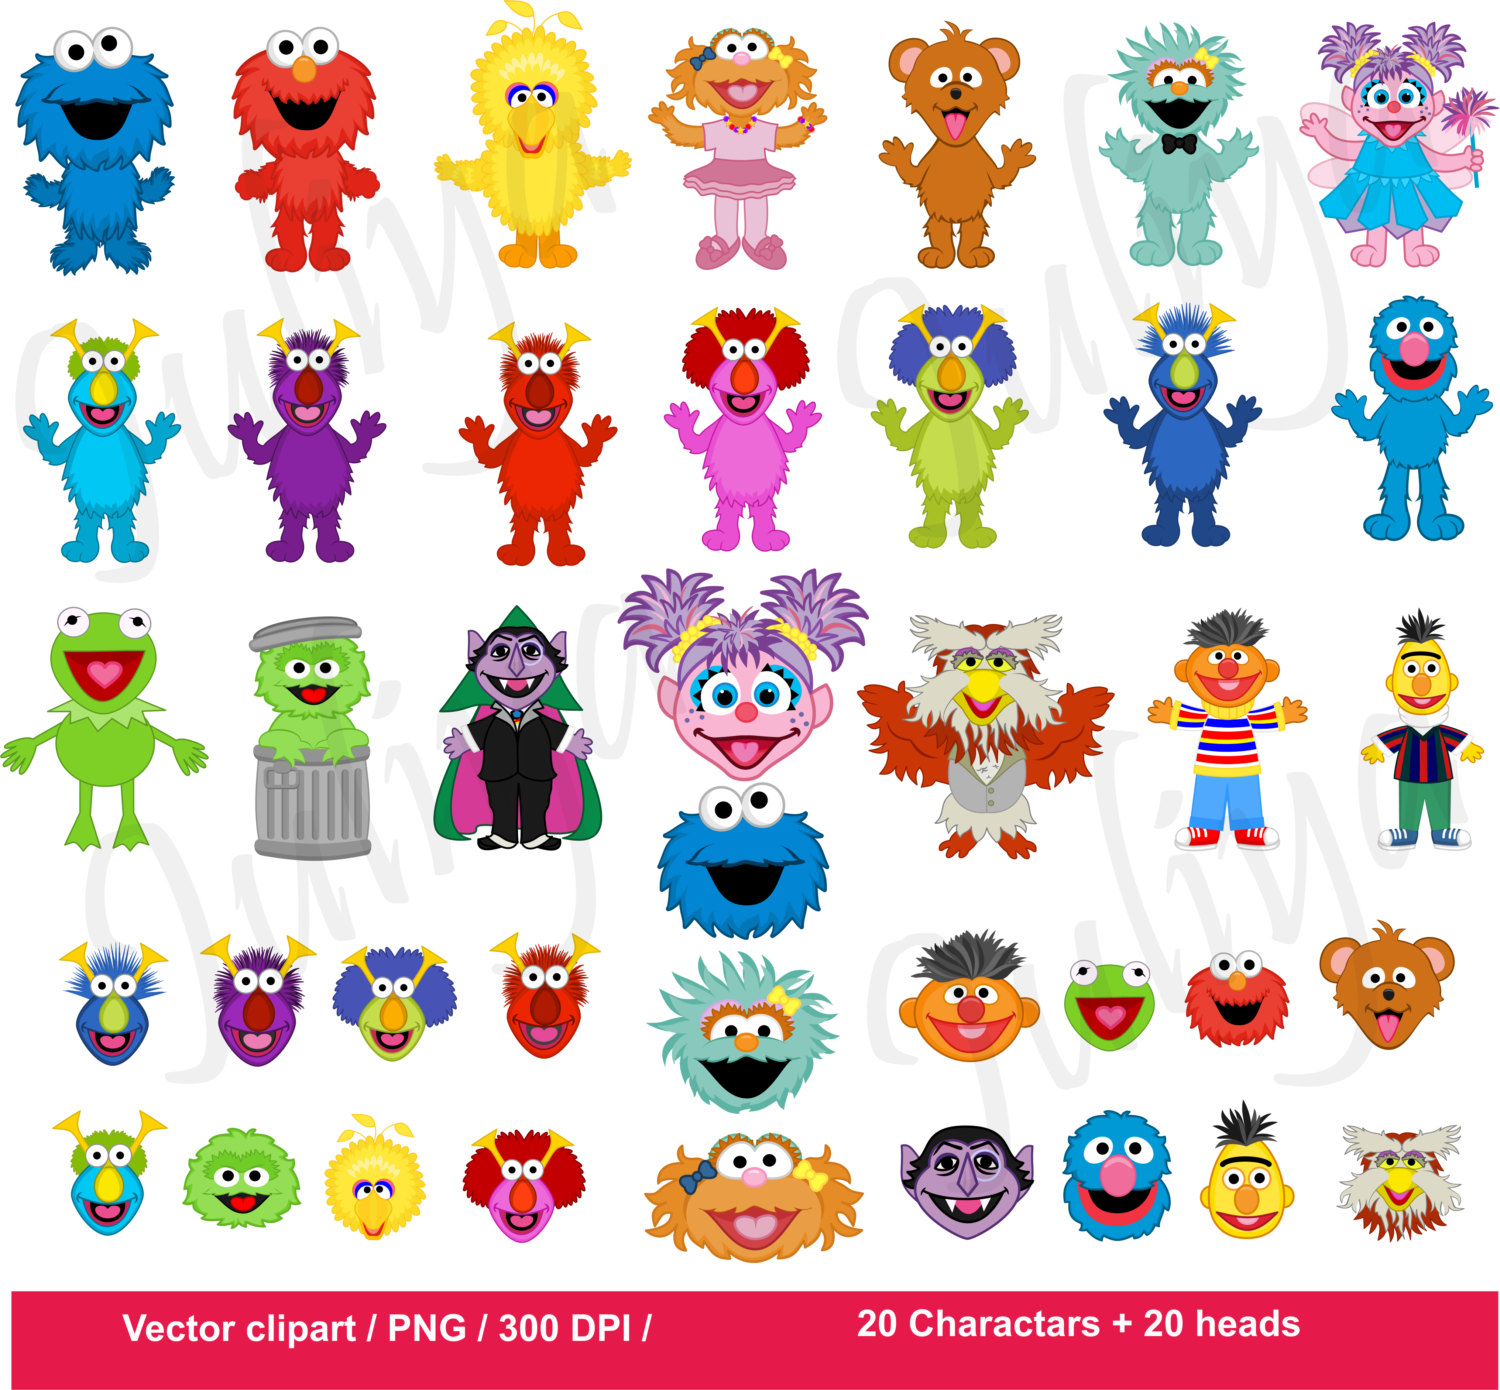 Printable Sesame Street Characters